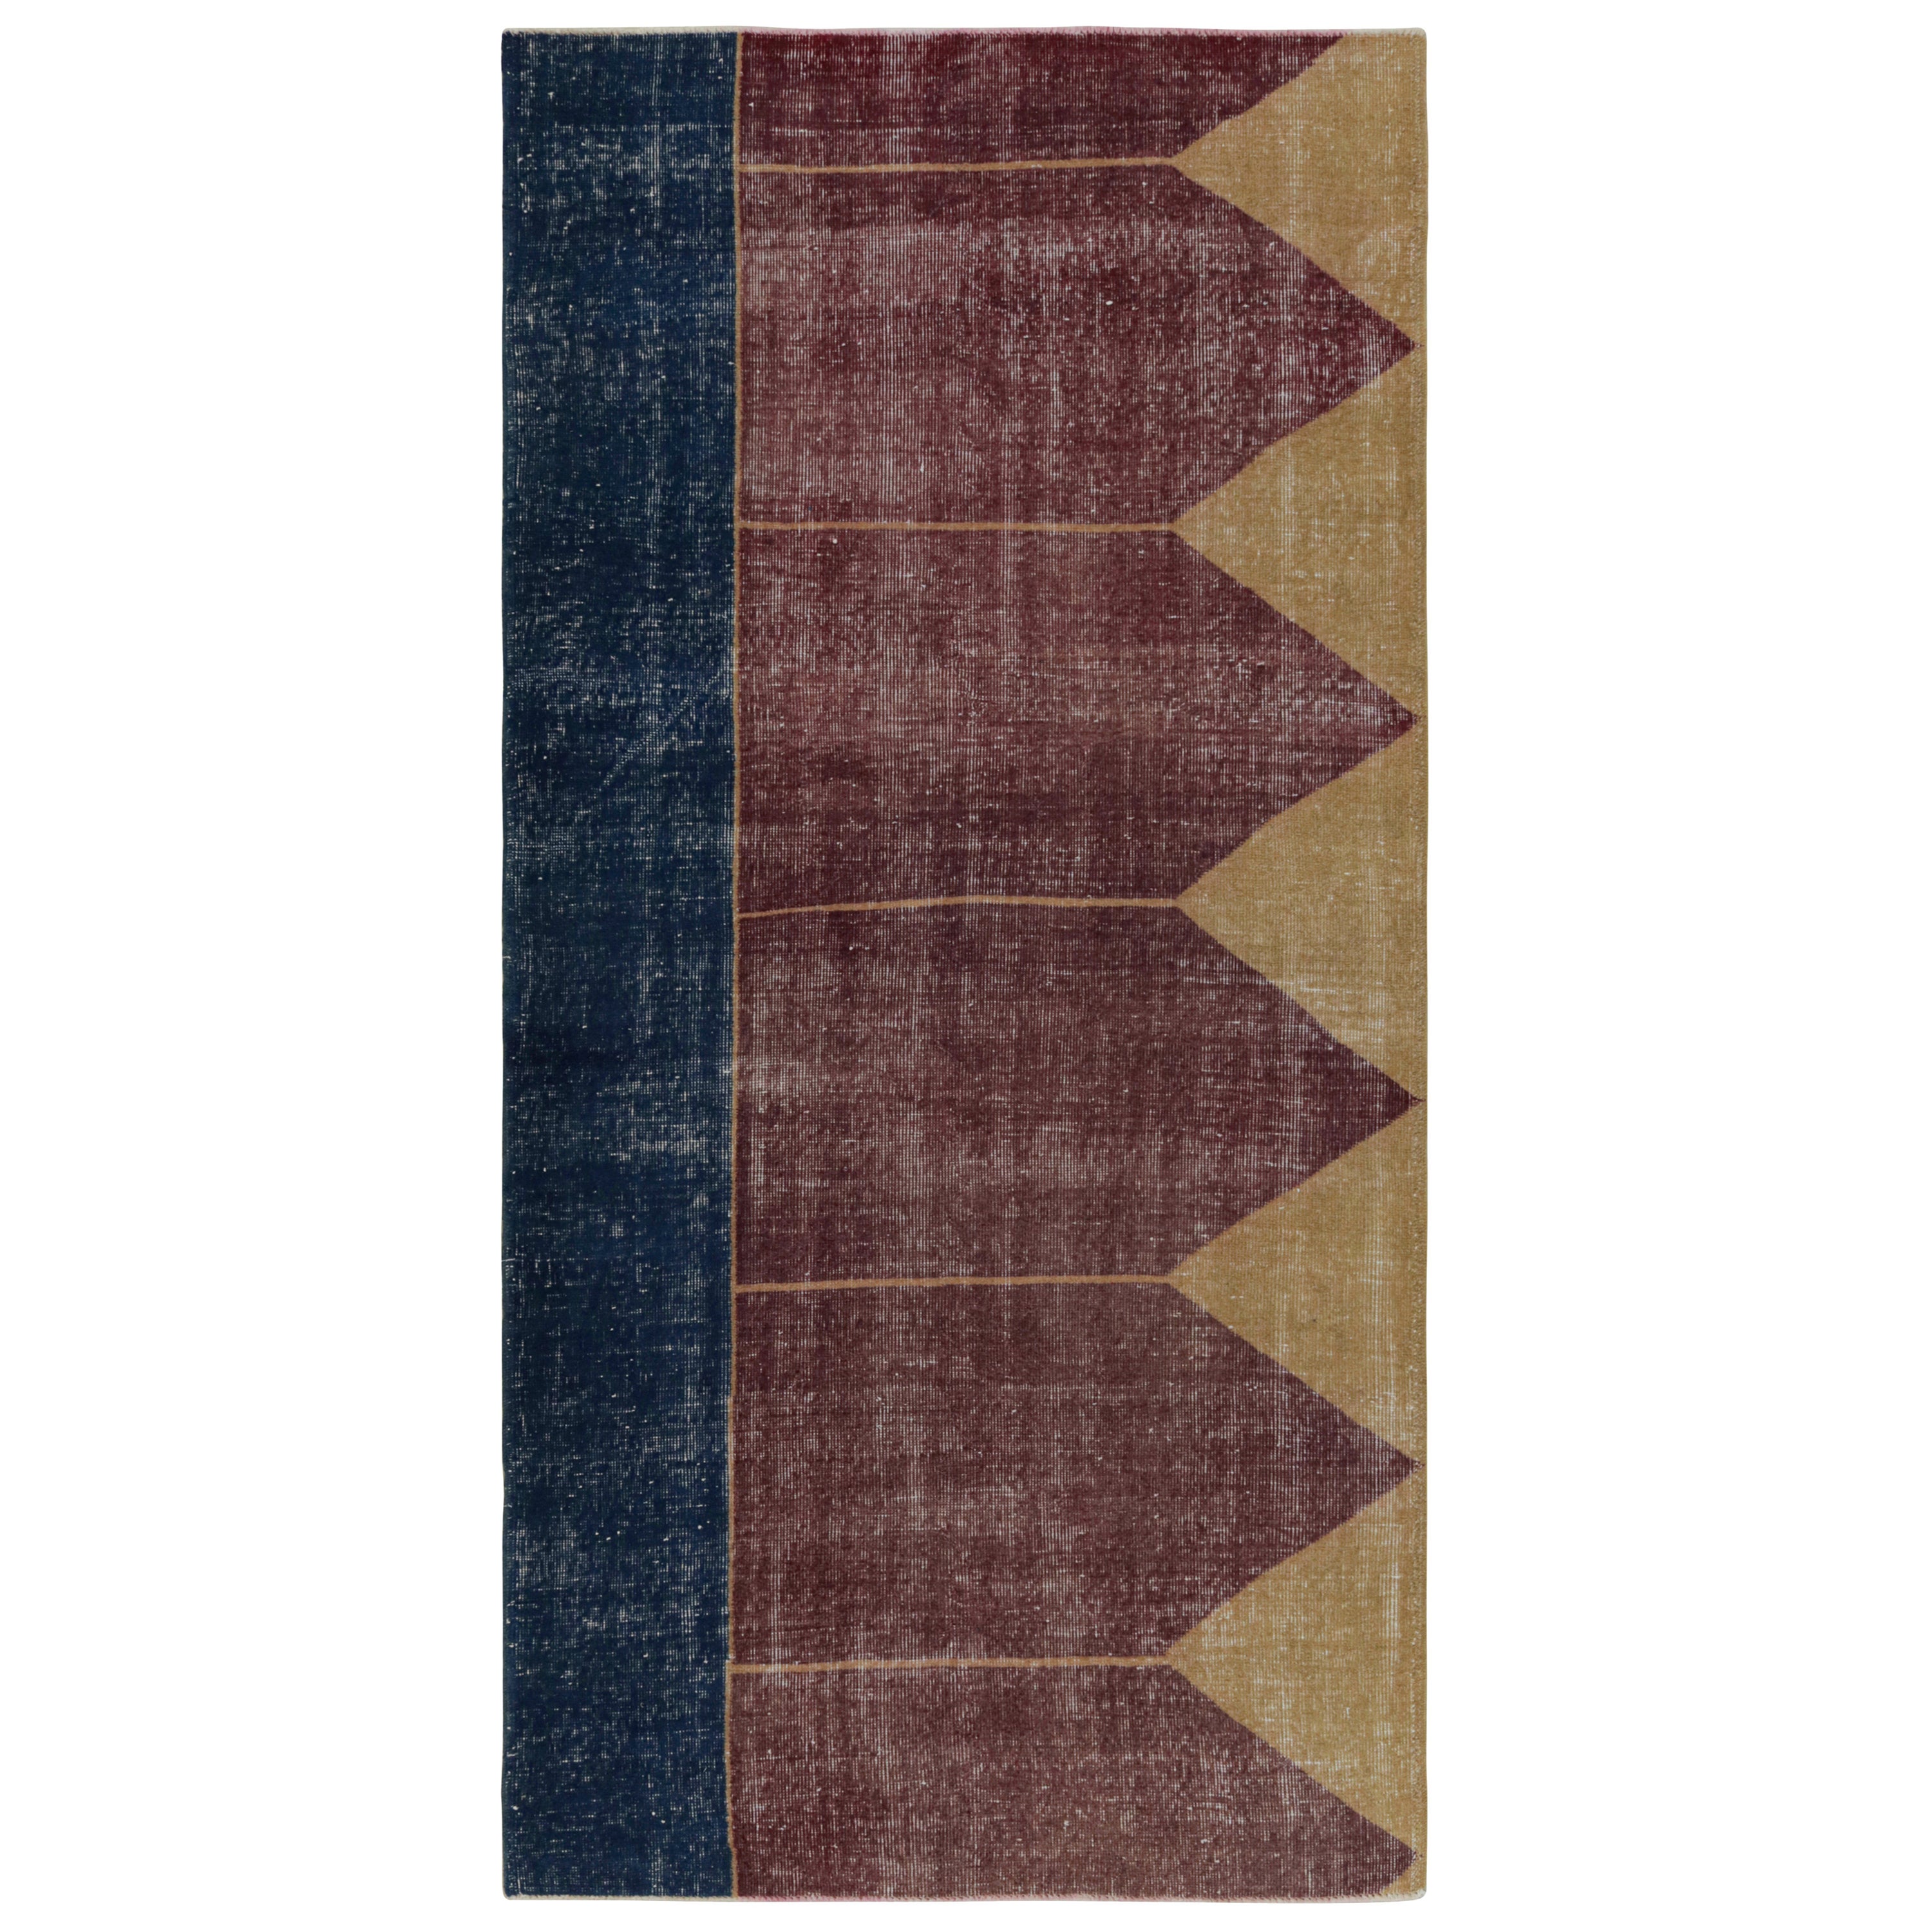 Vintage Turkish Rug in Brown, with Geometric Patterns, from Rug & Kilim